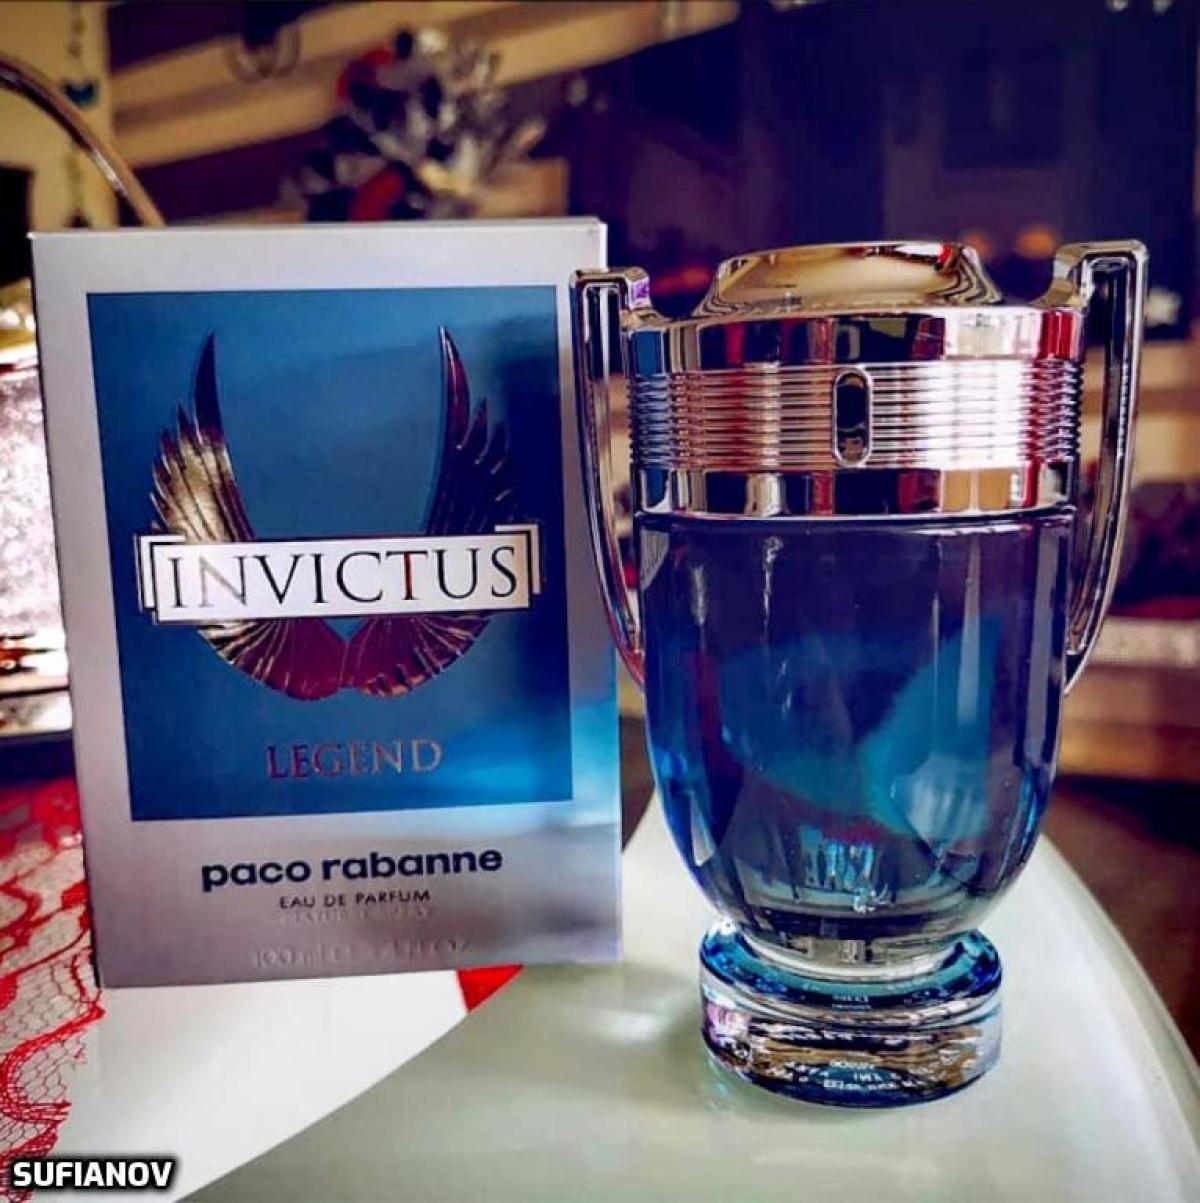 Invictus Legend Paco Rabanne cologne - a fragrance for men 2019